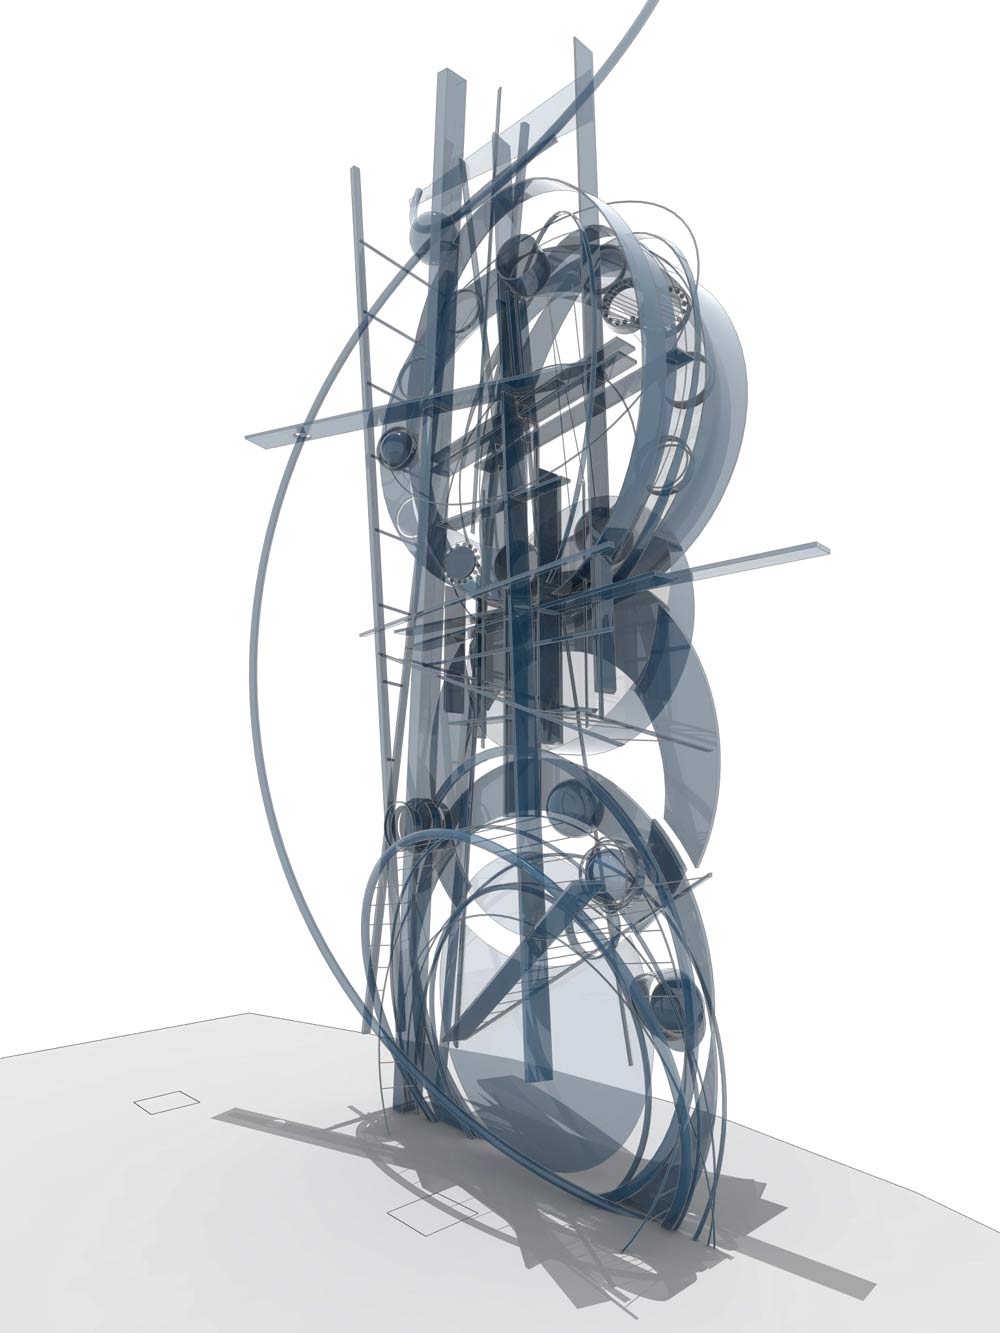 Project "Oscillating Harmony", image 10 | Lev Libeskind